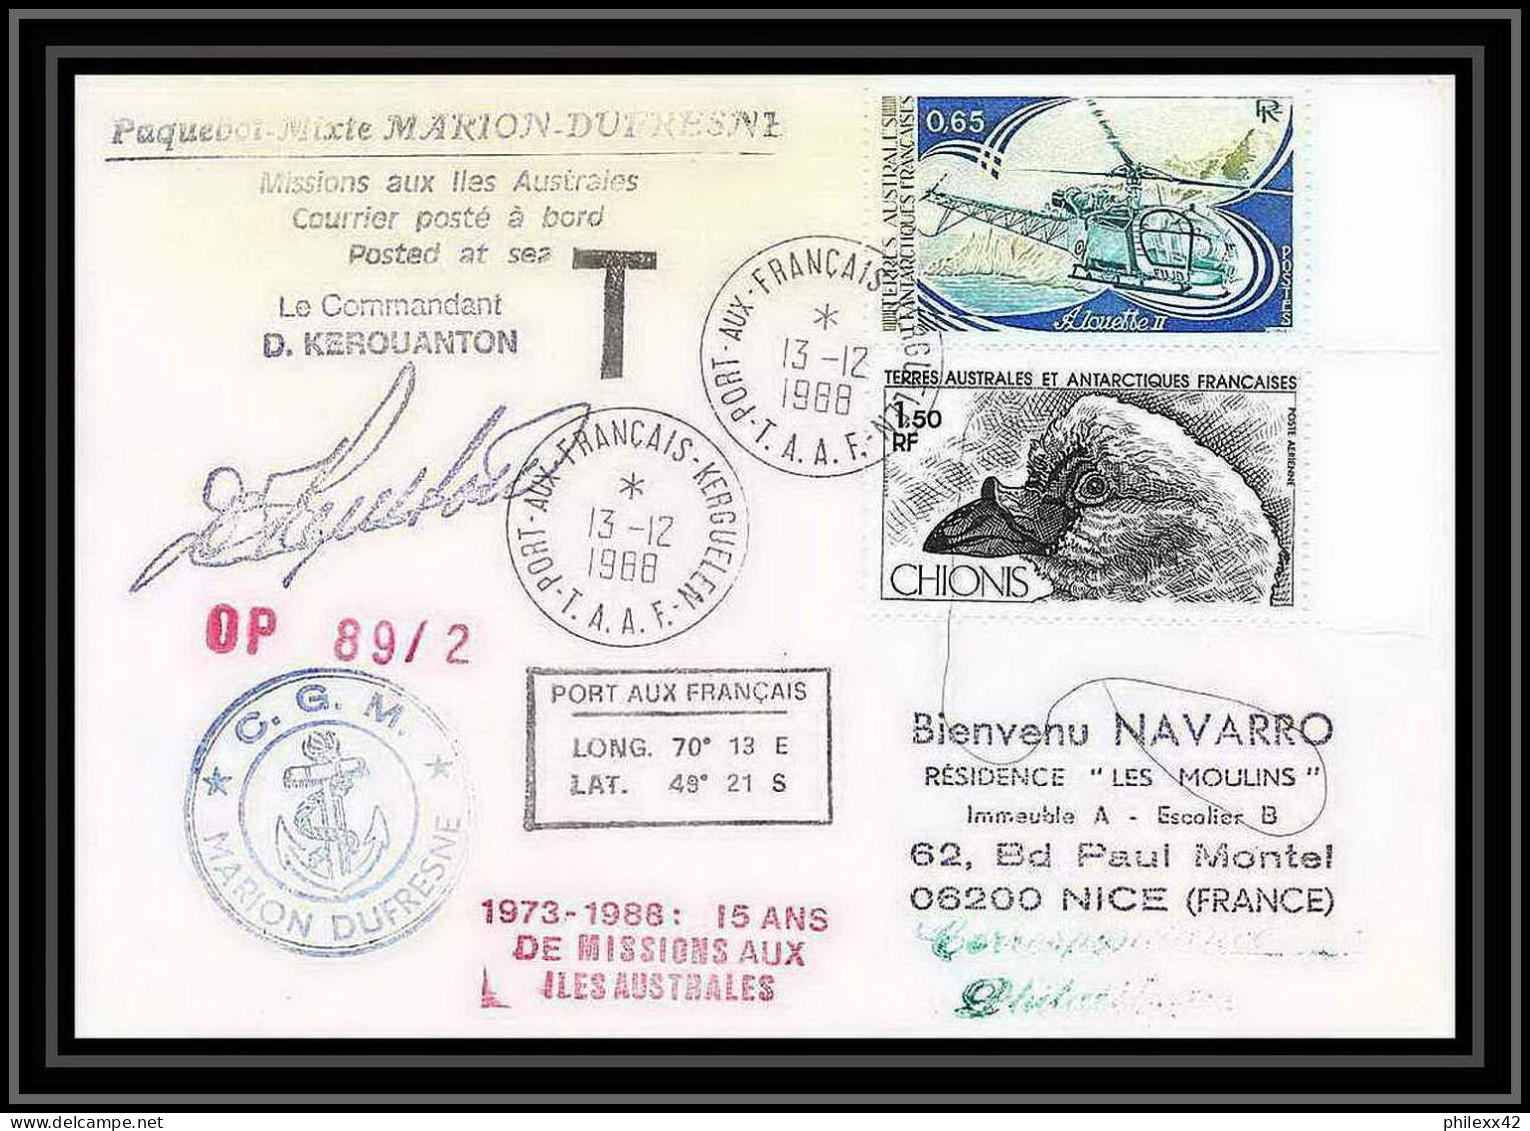 1588 89/2 13/12/1988 Marion Dufresne Signé Signed Kerouanton Taxe TAAF Antarctic Terres Australes Lettre (cover) - Expediciones Antárticas